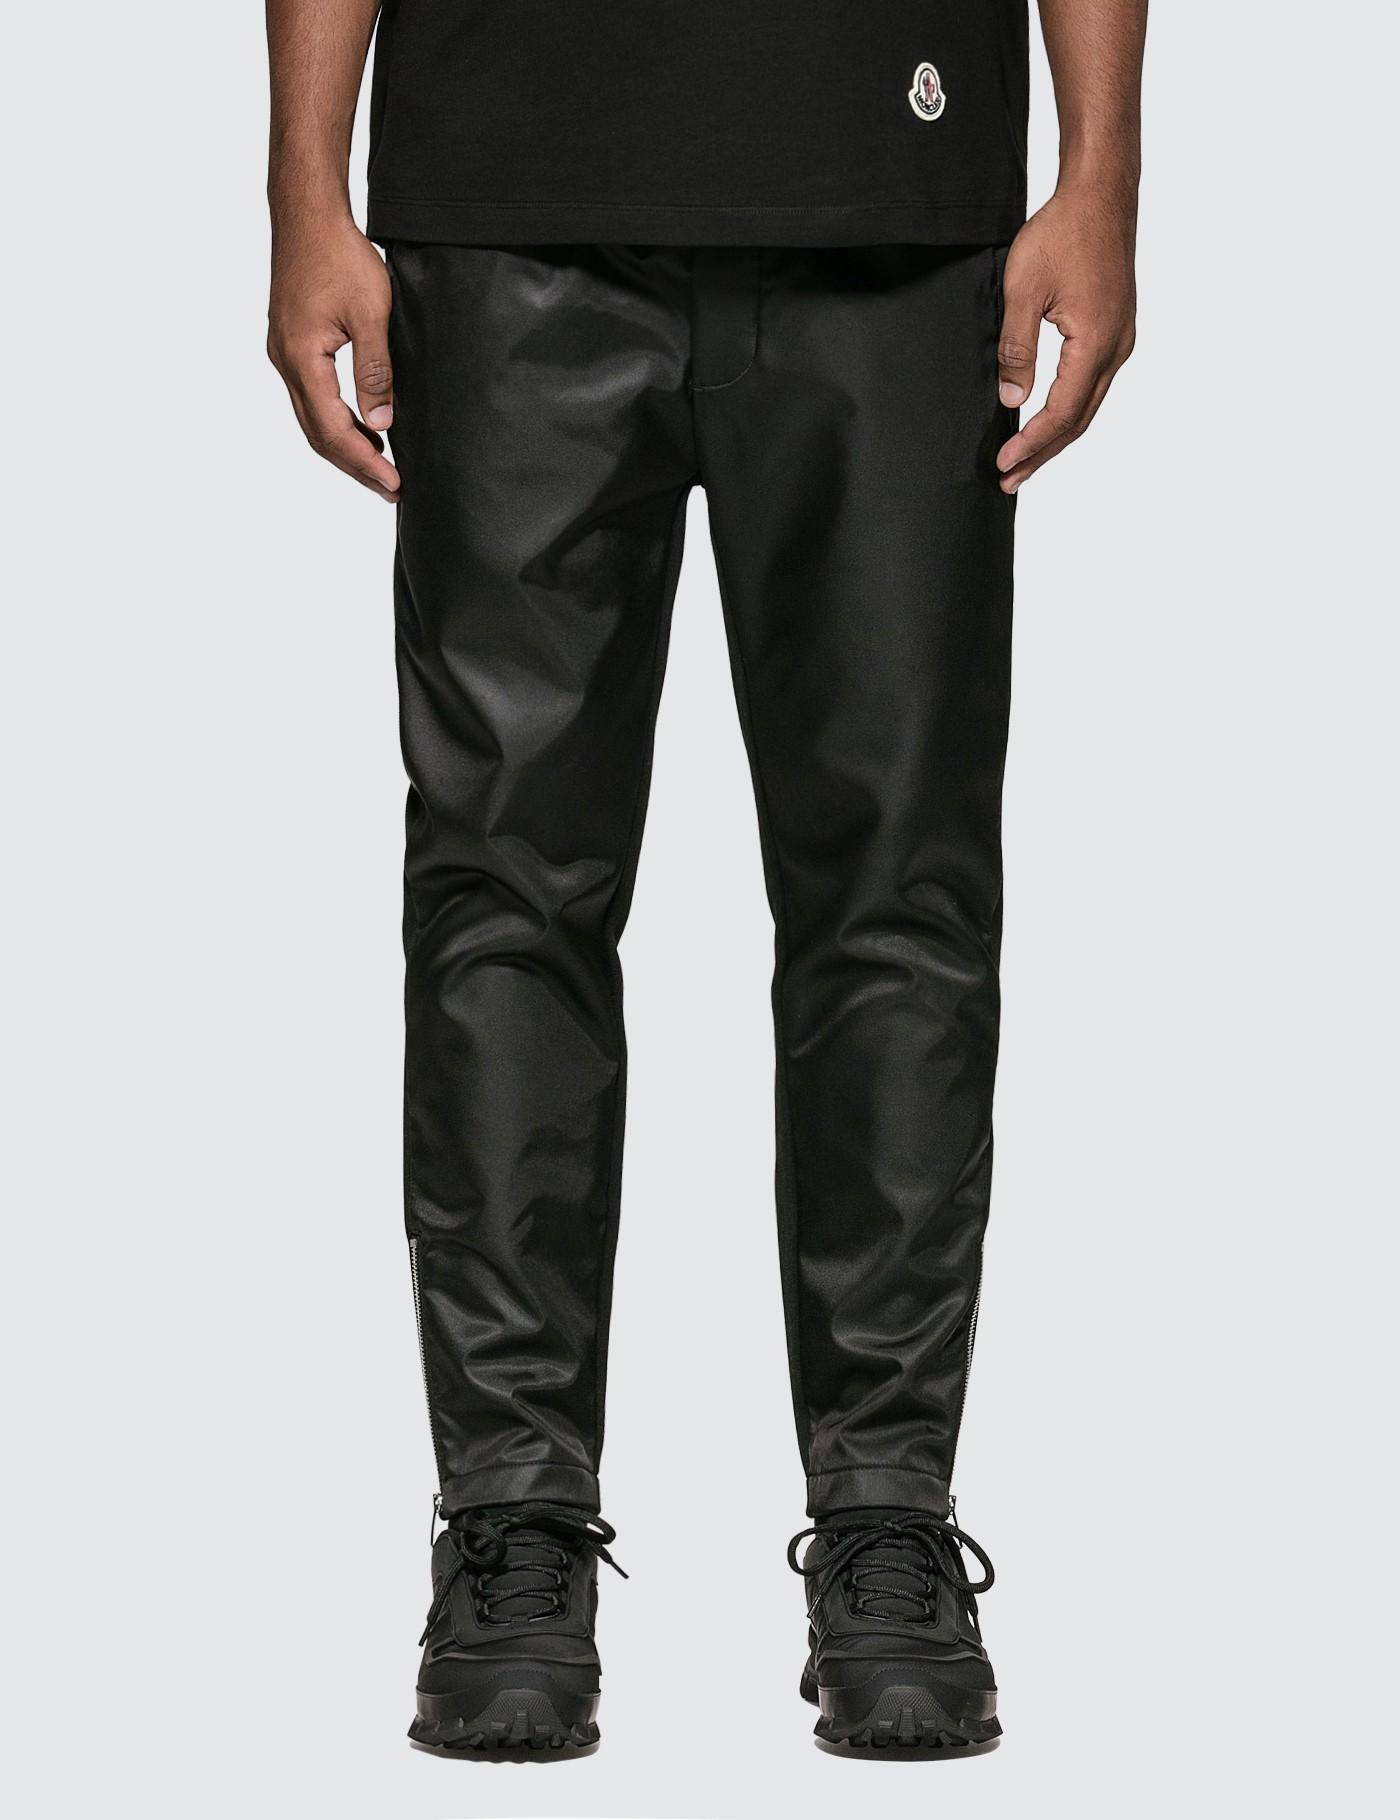 Prada Synthetic Nylon Cotton Sweatpants in Black for Men - Lyst